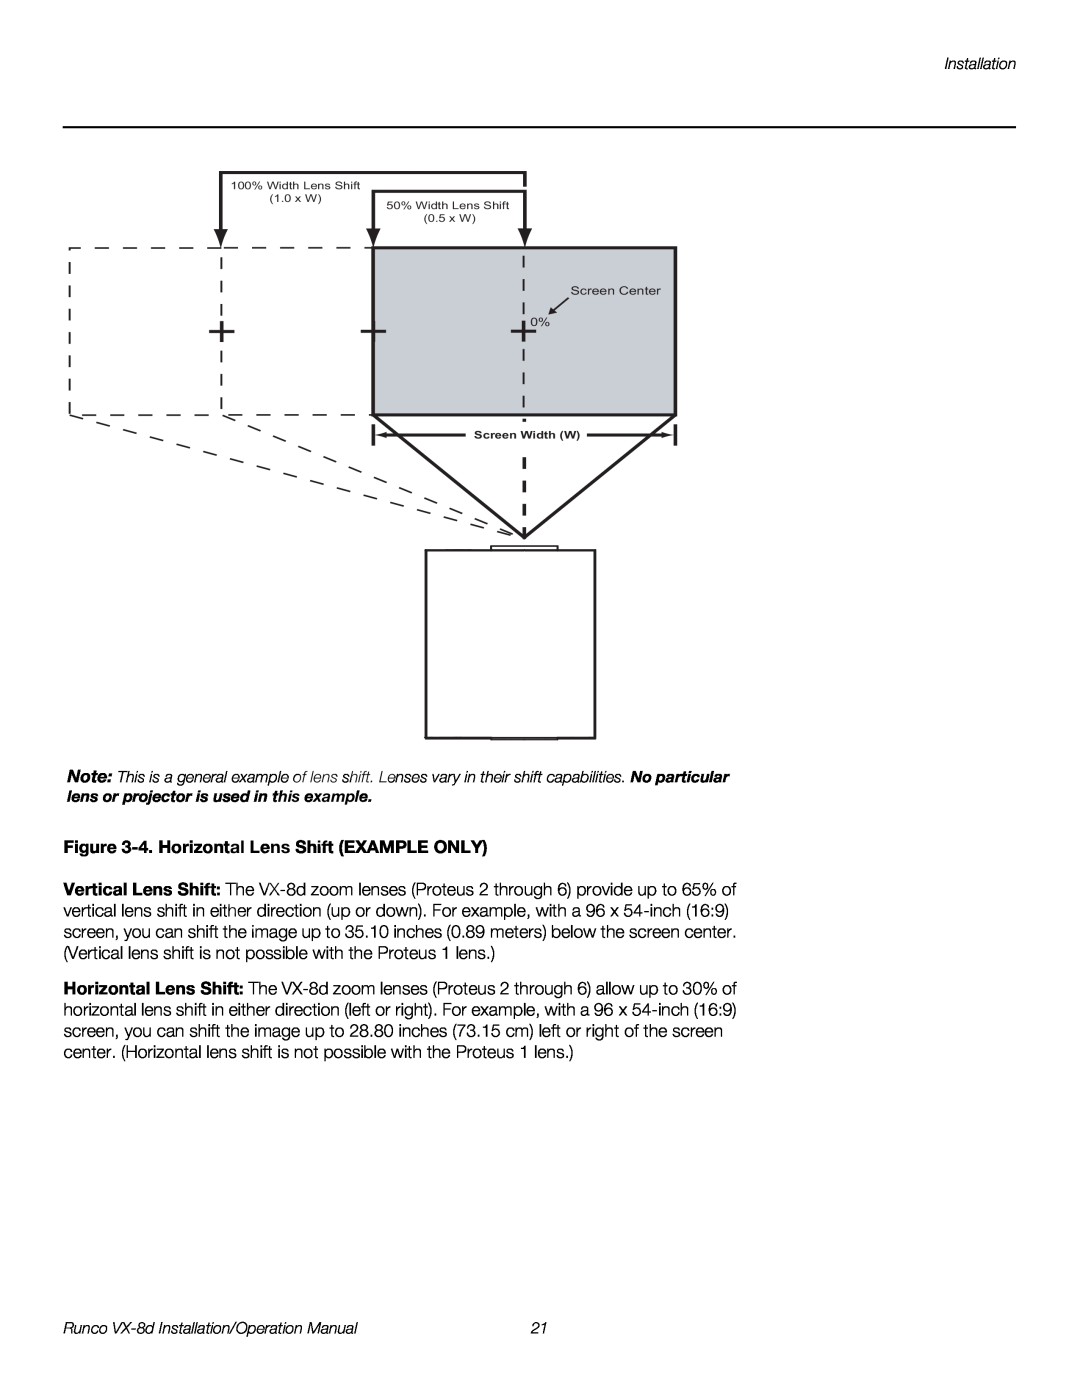 Runco VX-8D operation manual 4. Horizontal Lens Shift EXAMPLE ONLY, Screen Center 0% 